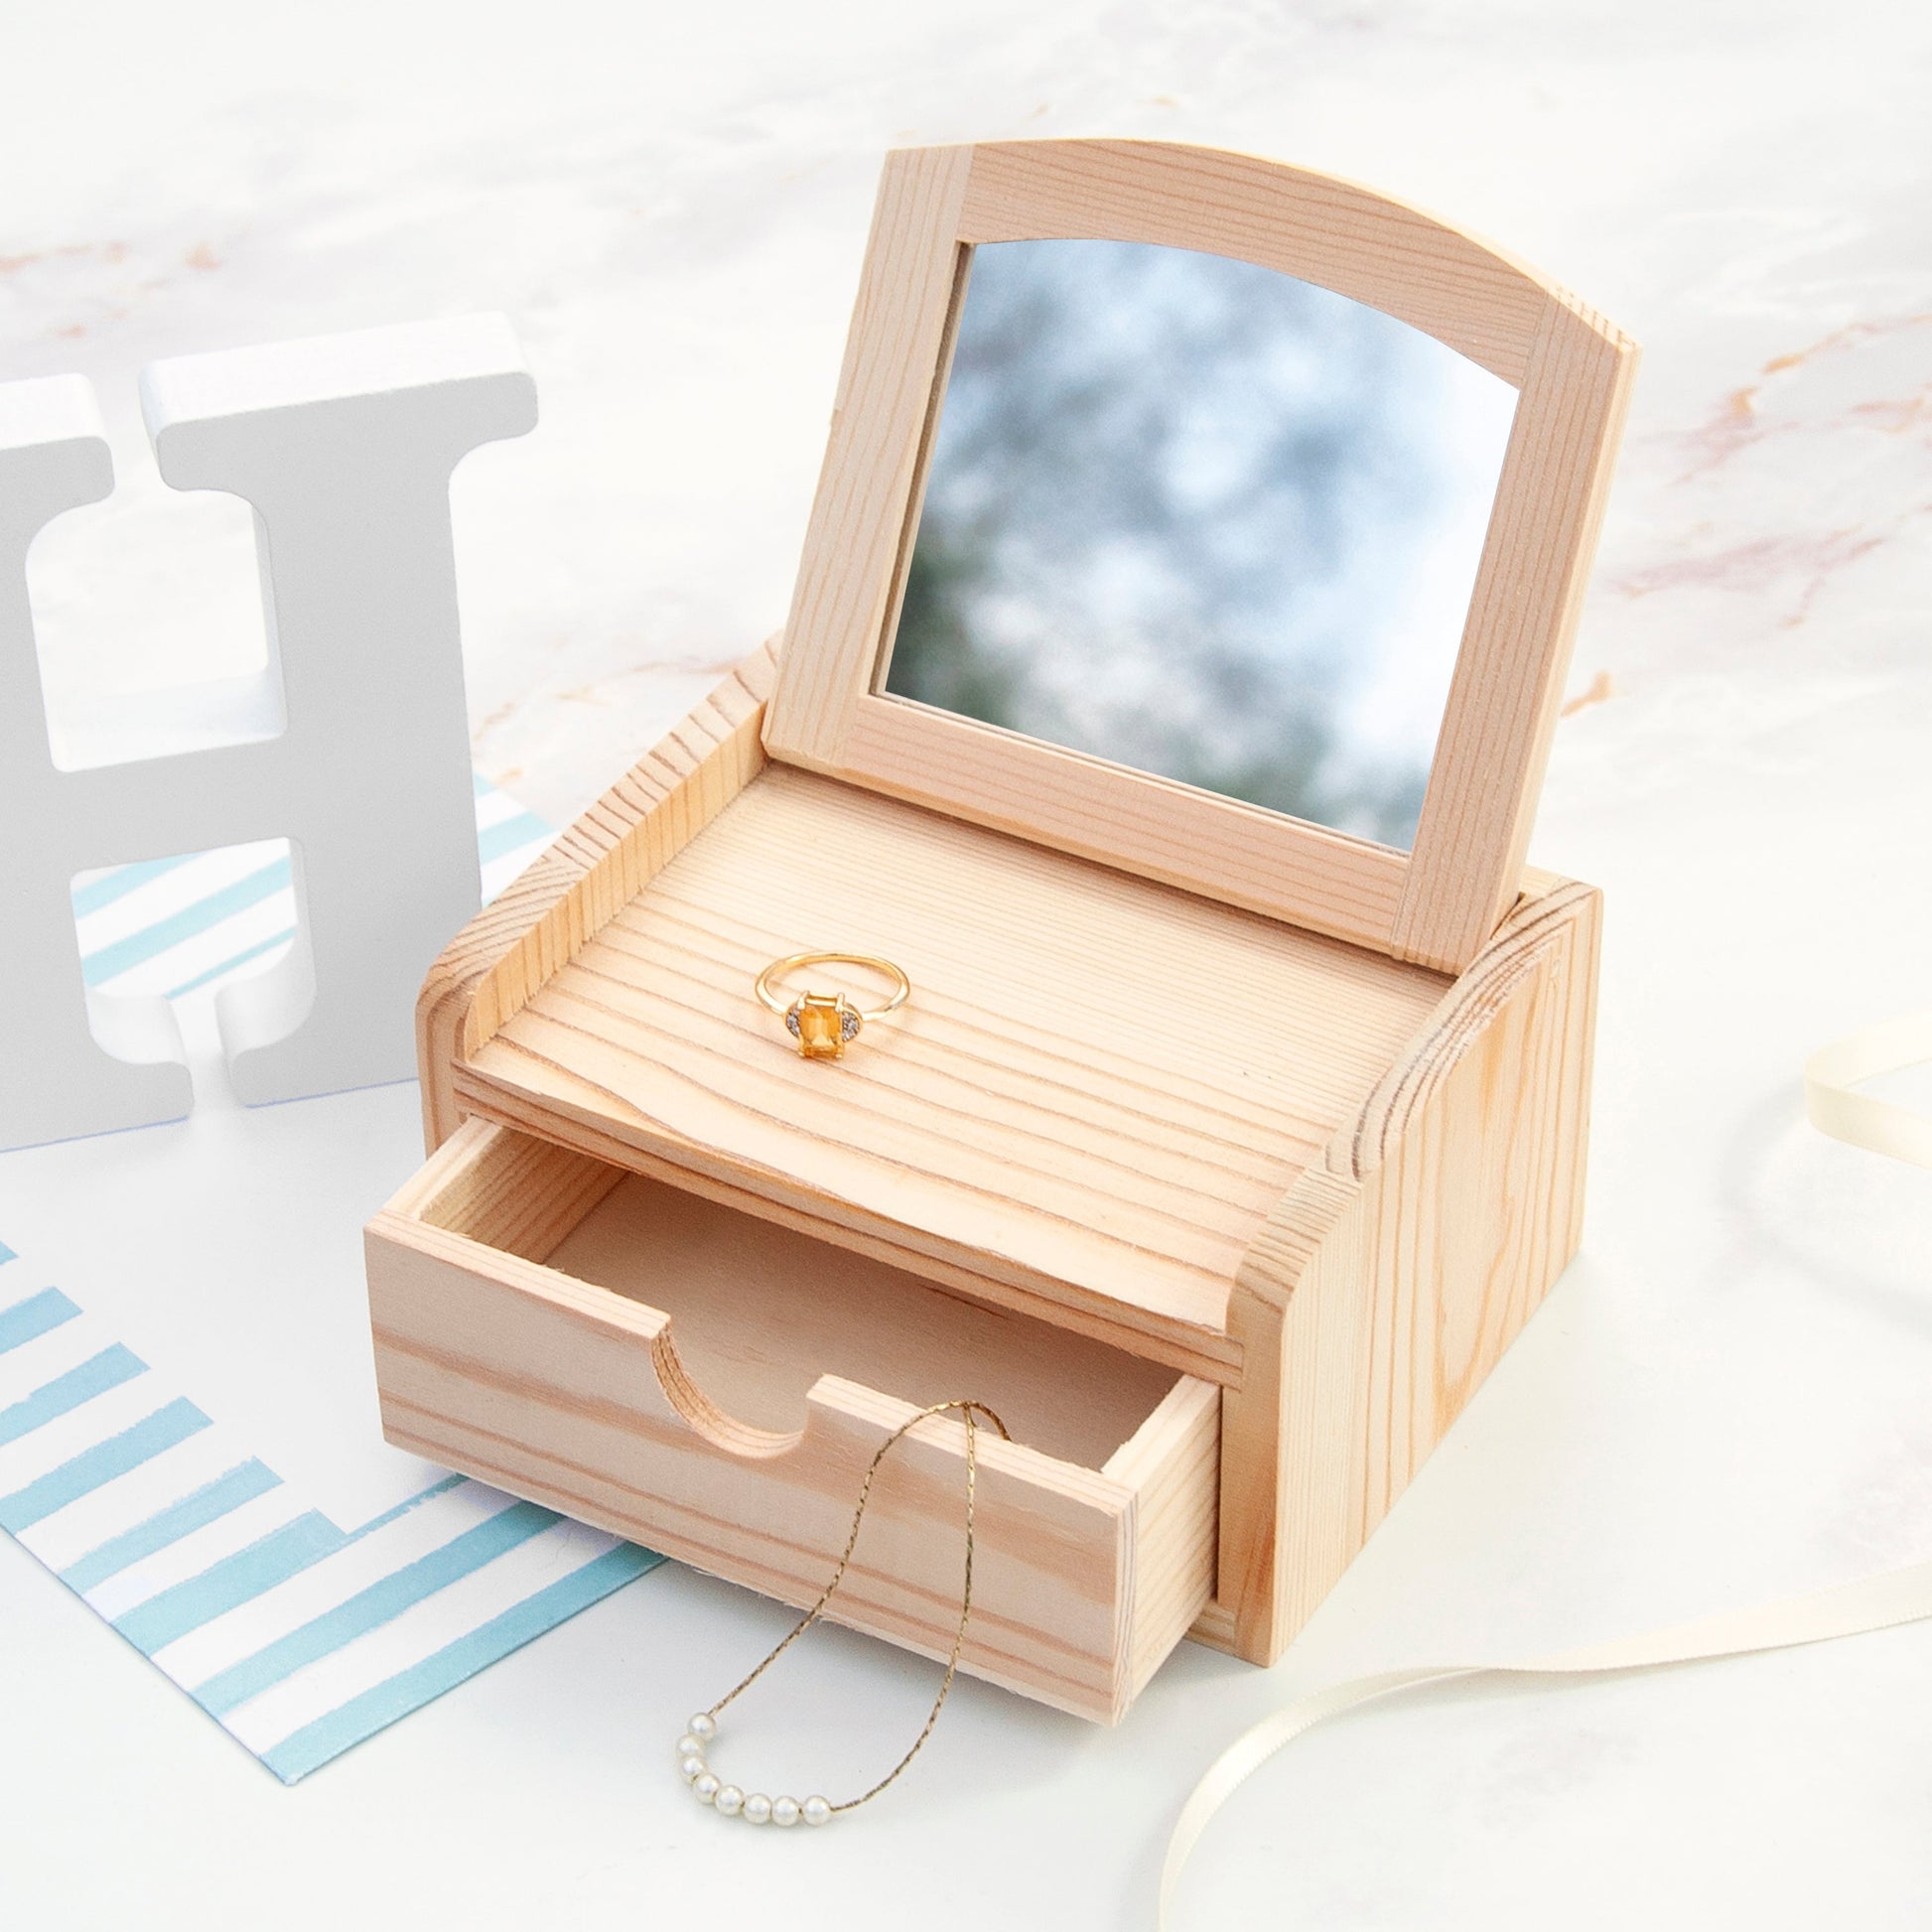 Personalized Jewellery Boxes & Storage - Personalized Kid’s Rainbow Jewellery Box 